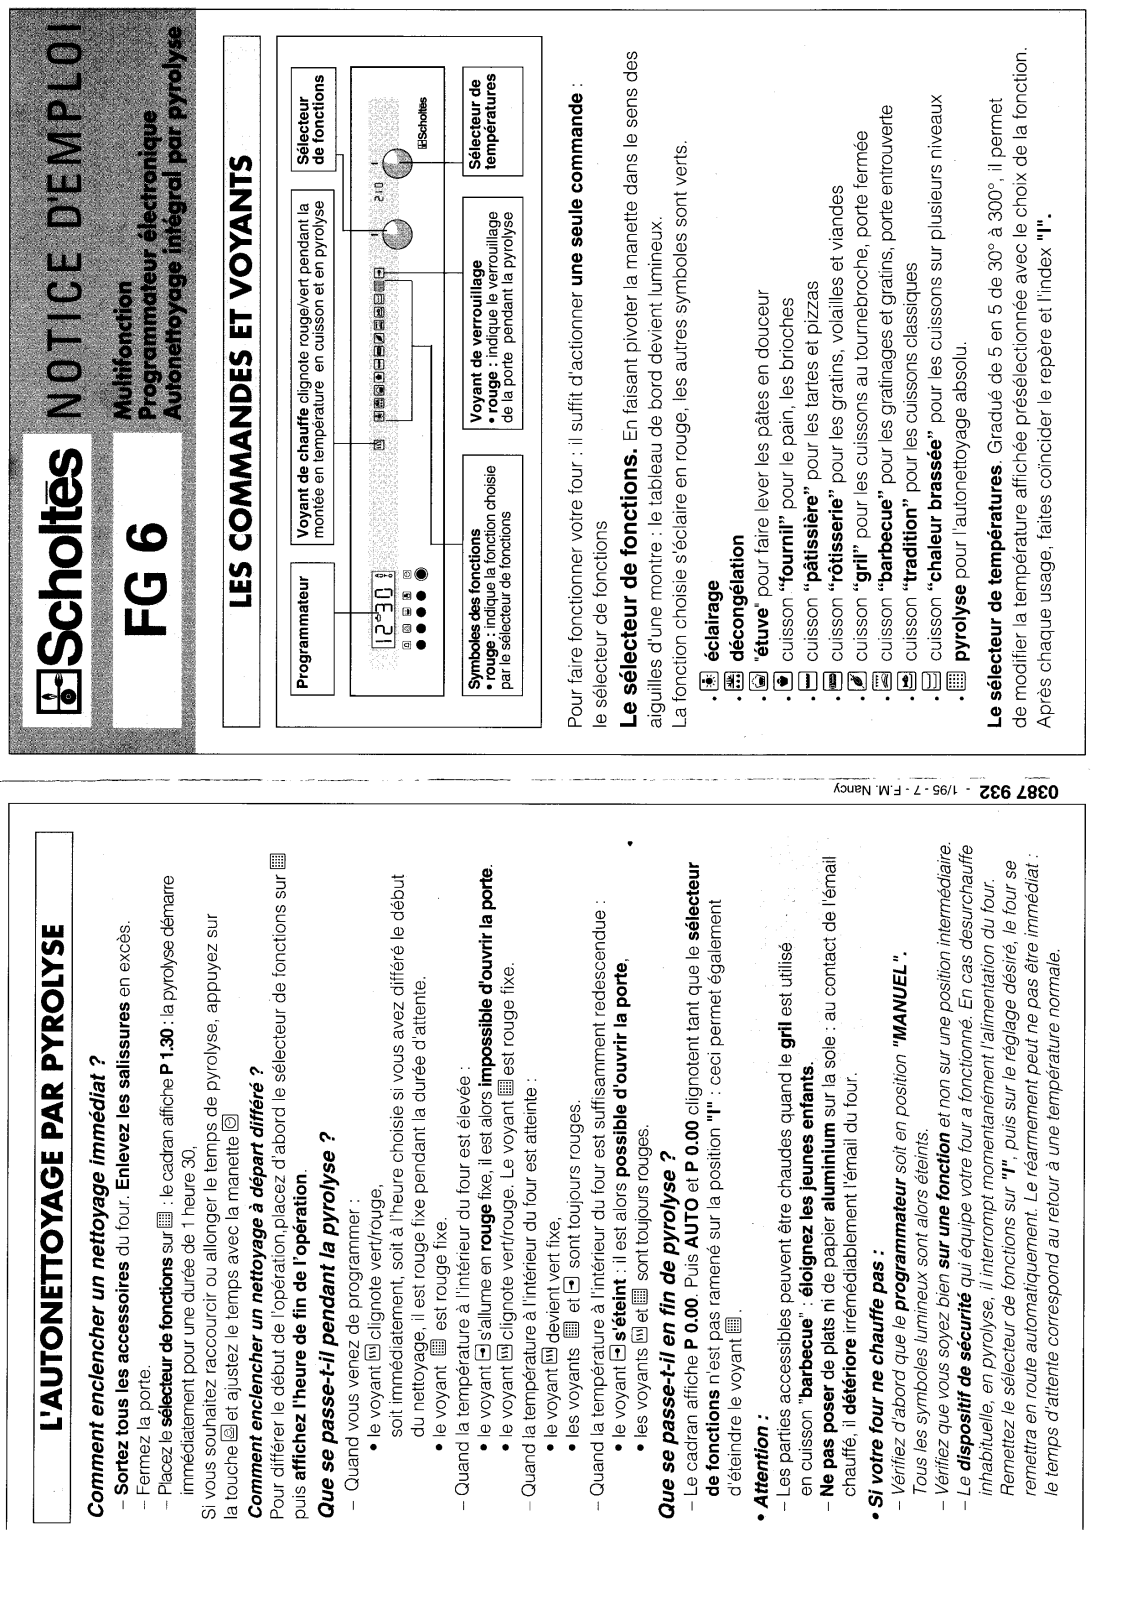 SCHOLTES FG 6 User Manual